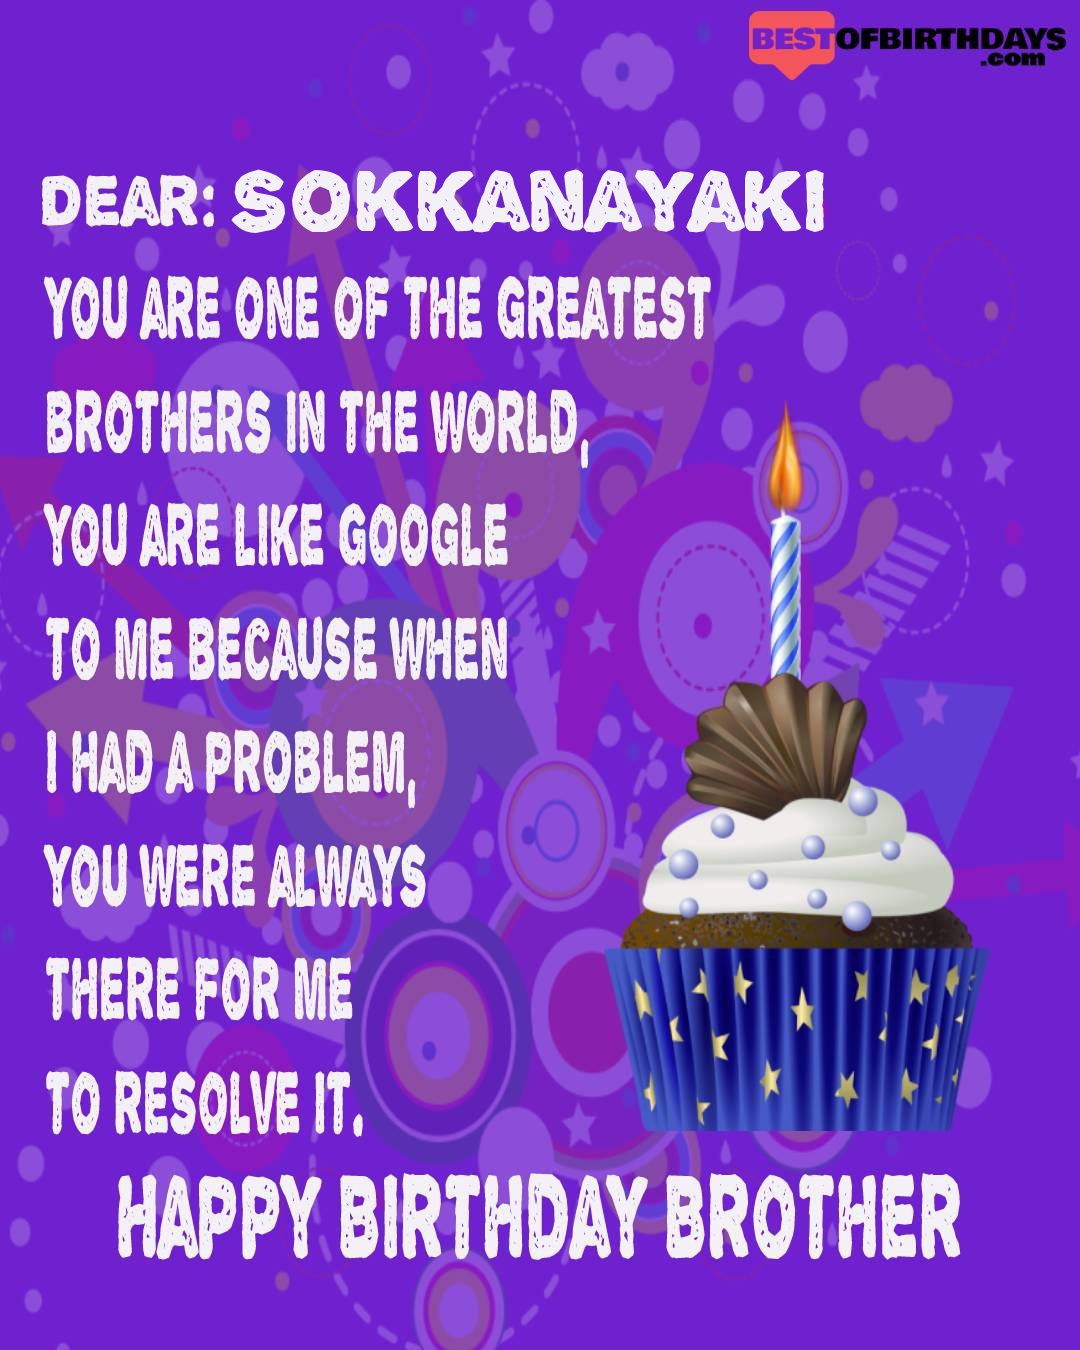 Happy birthday sokkanayaki bhai brother bro